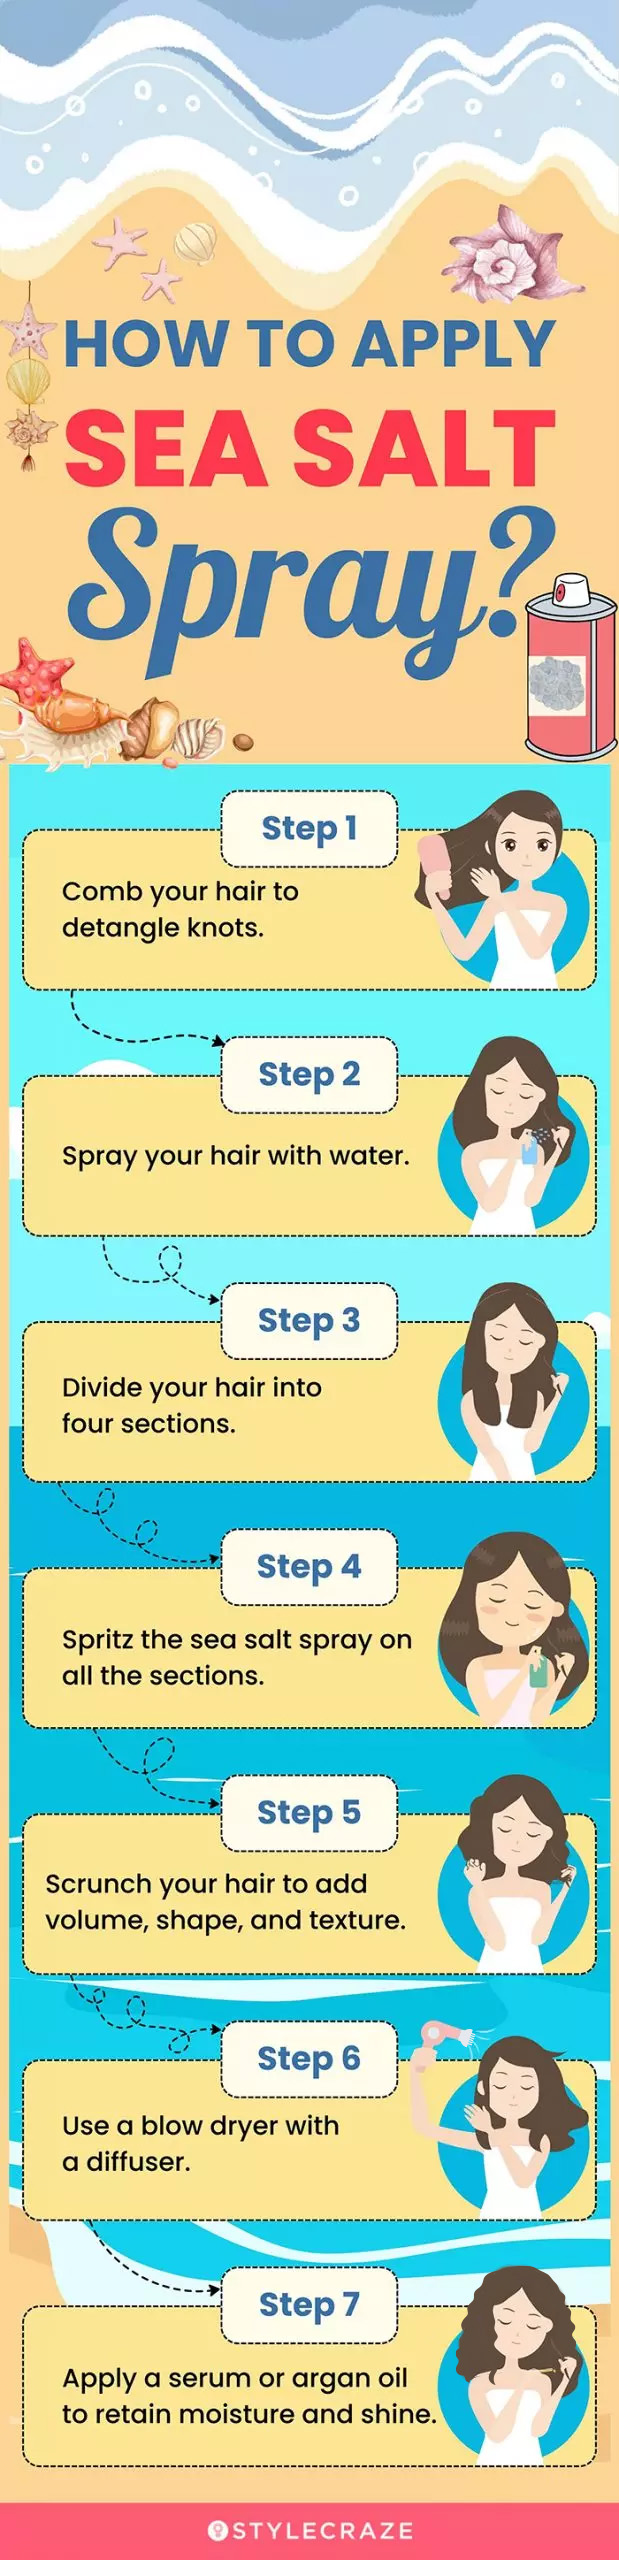 how to apply sea salt spray (infographic)